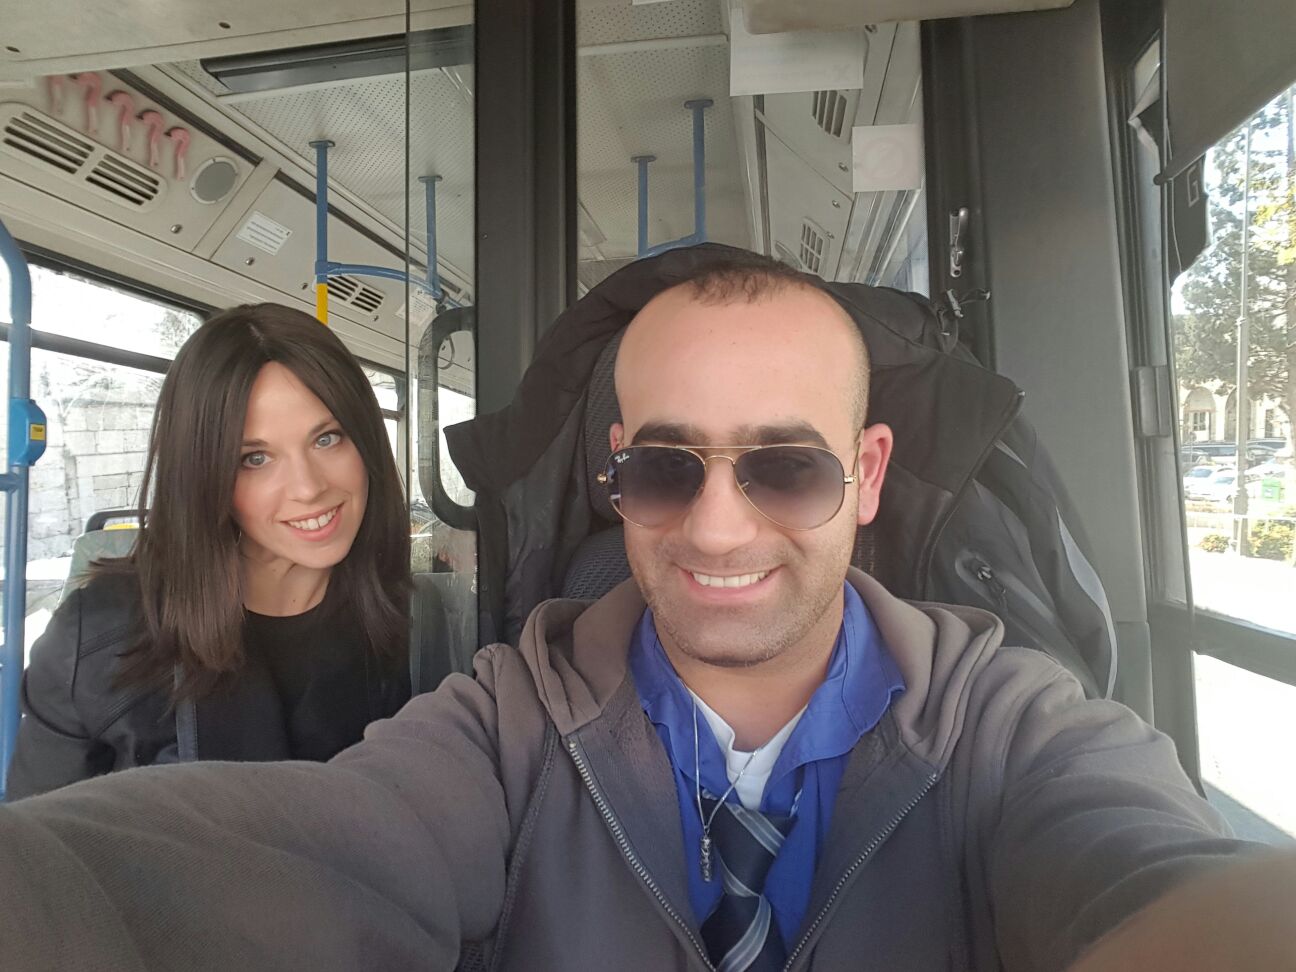 Driver! Nahag! Israel’s Top 10 Bus Driver Personalities